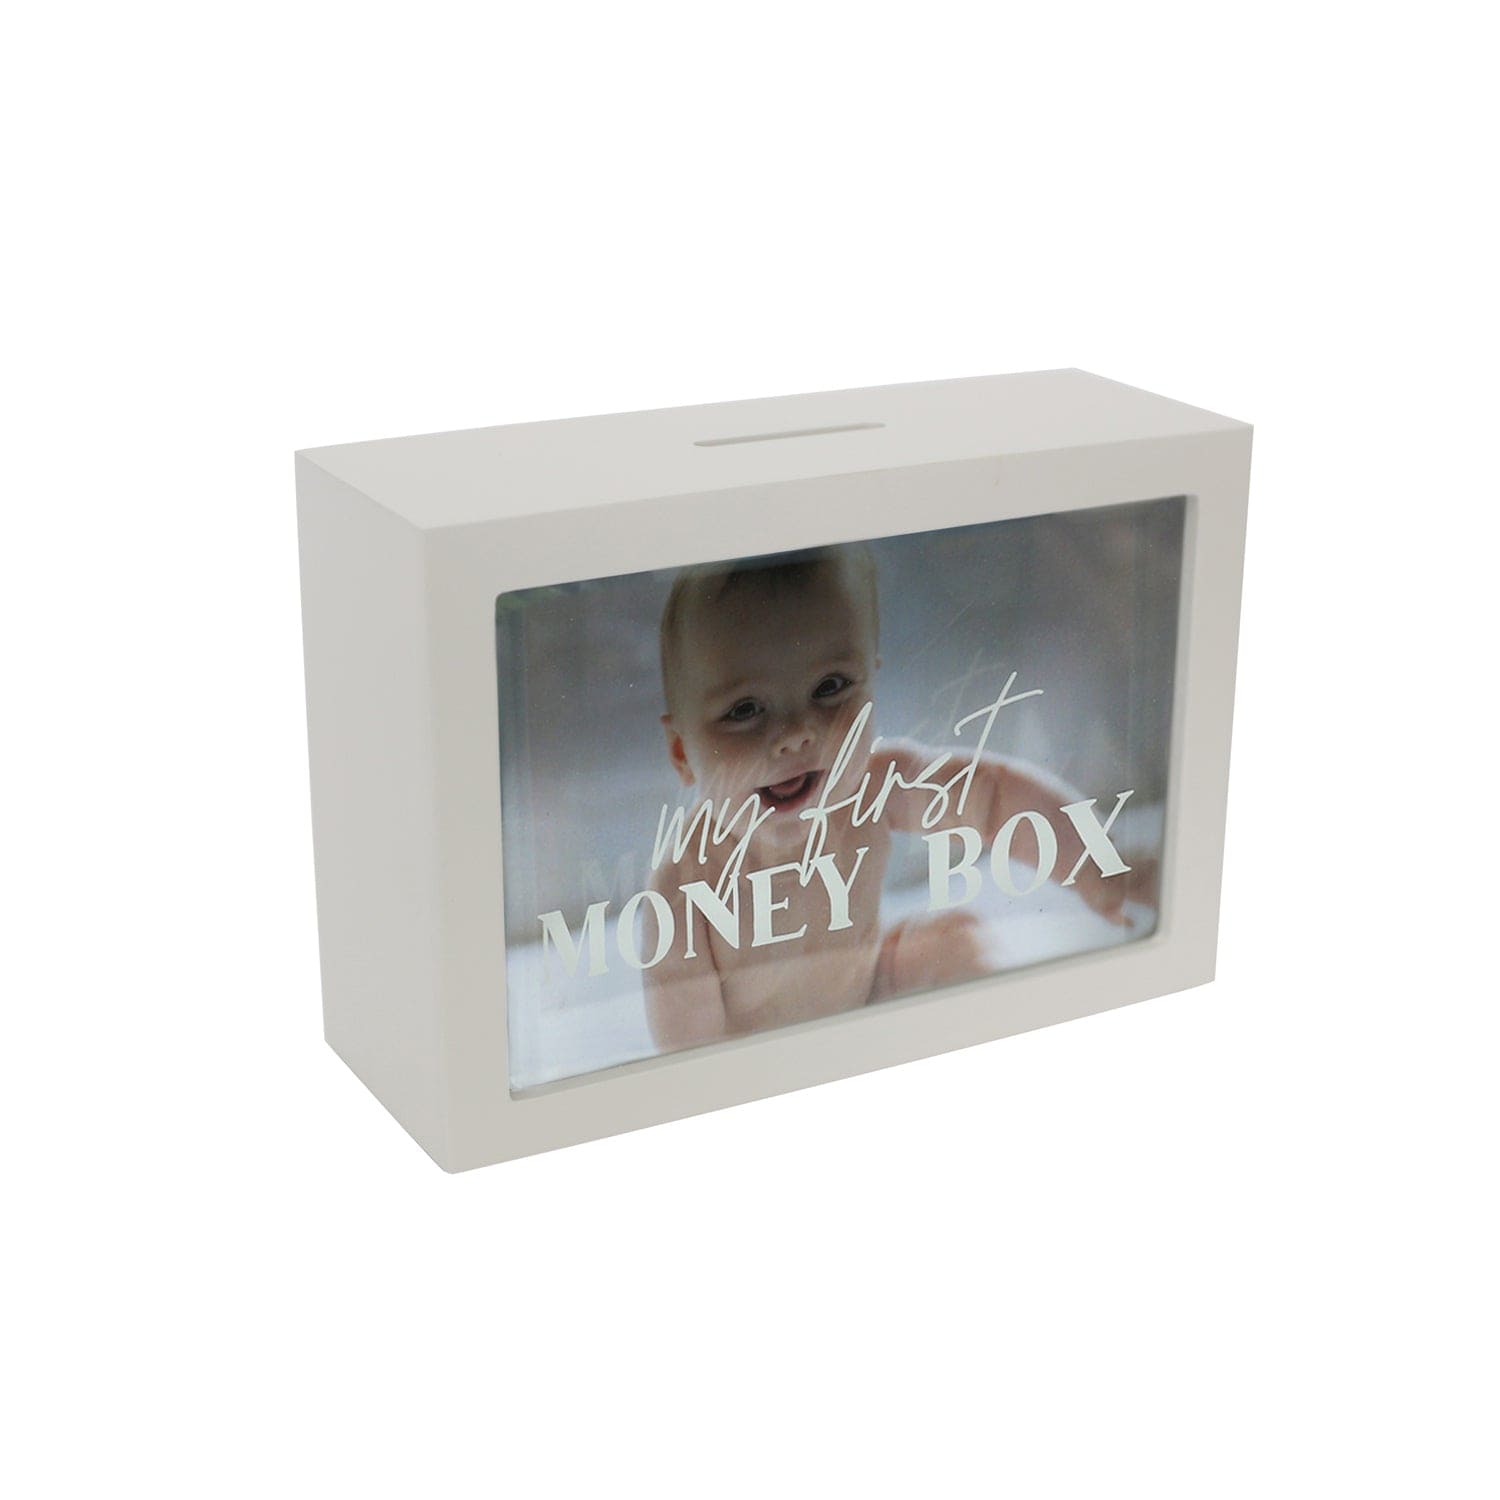 Splosh Baby Gift My First Money Box